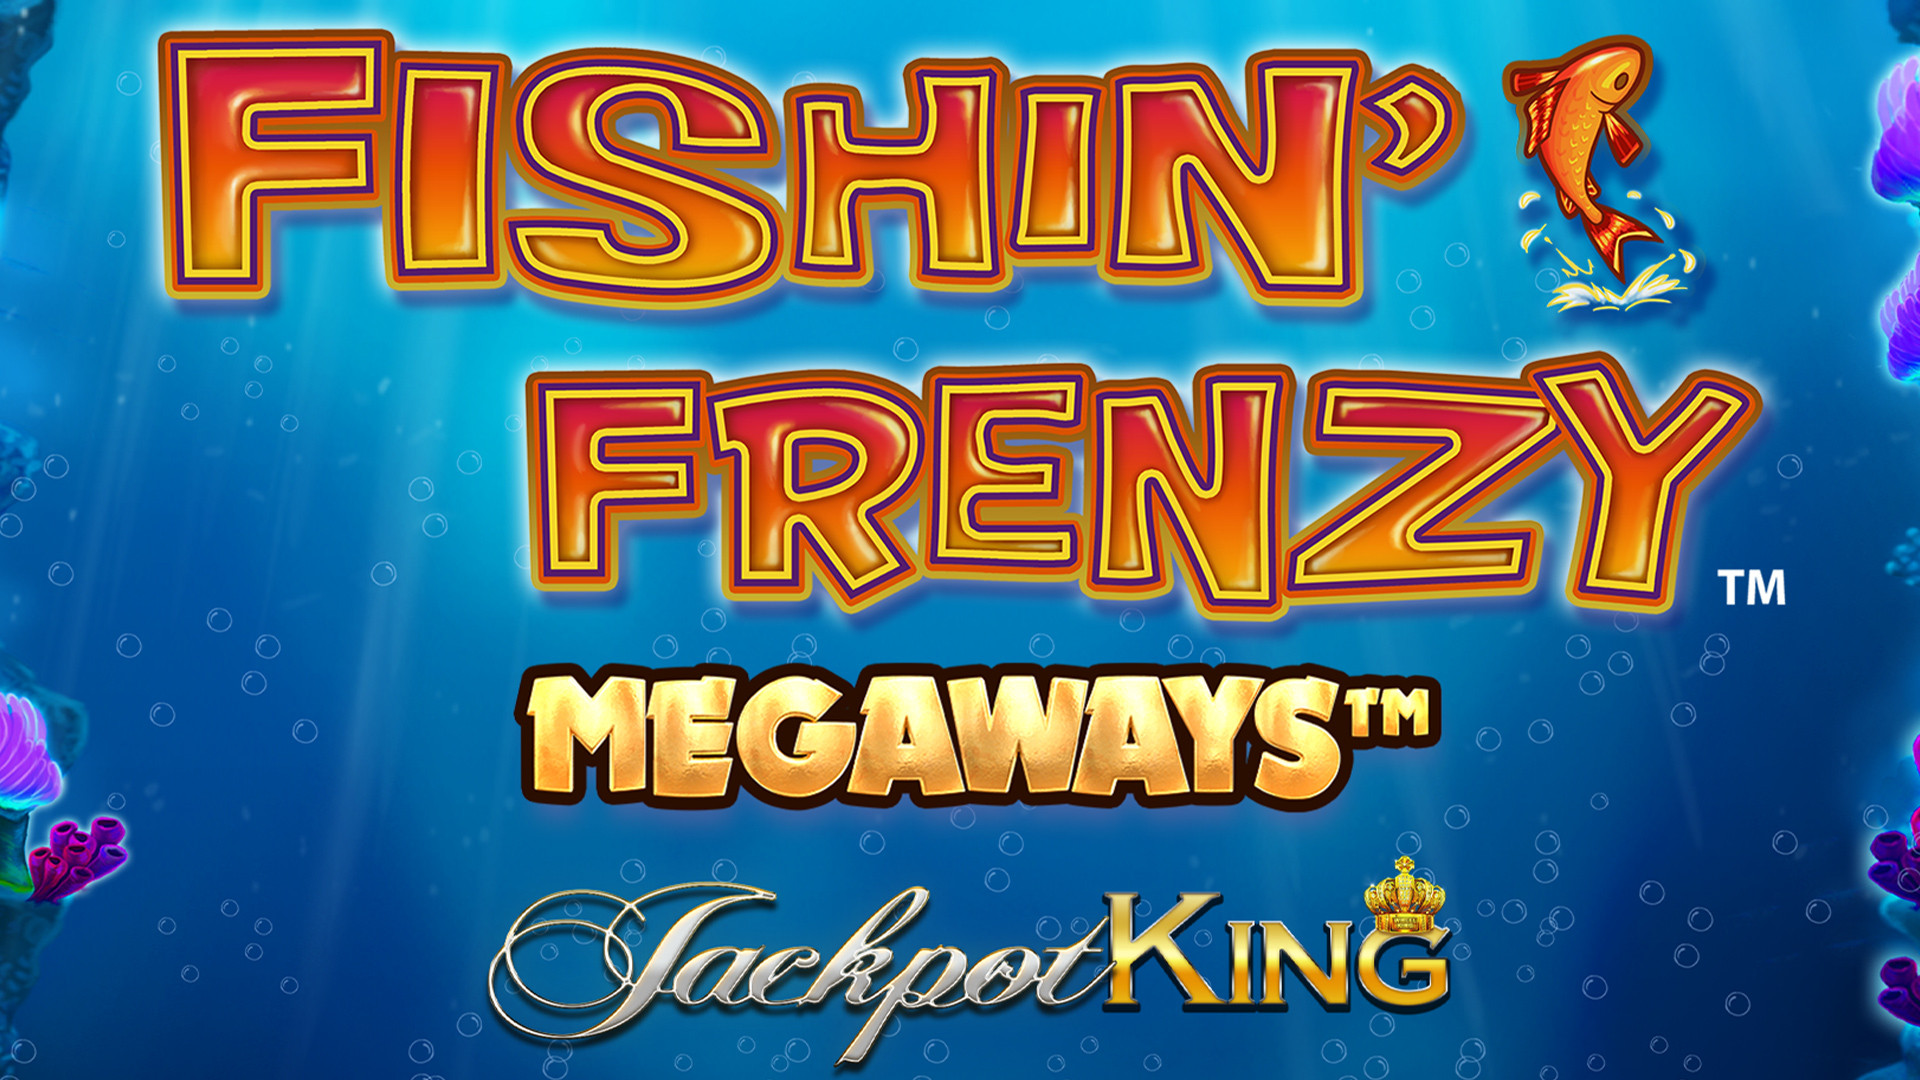 Fishin' Frenzy MEGAWAYS Jackpot King